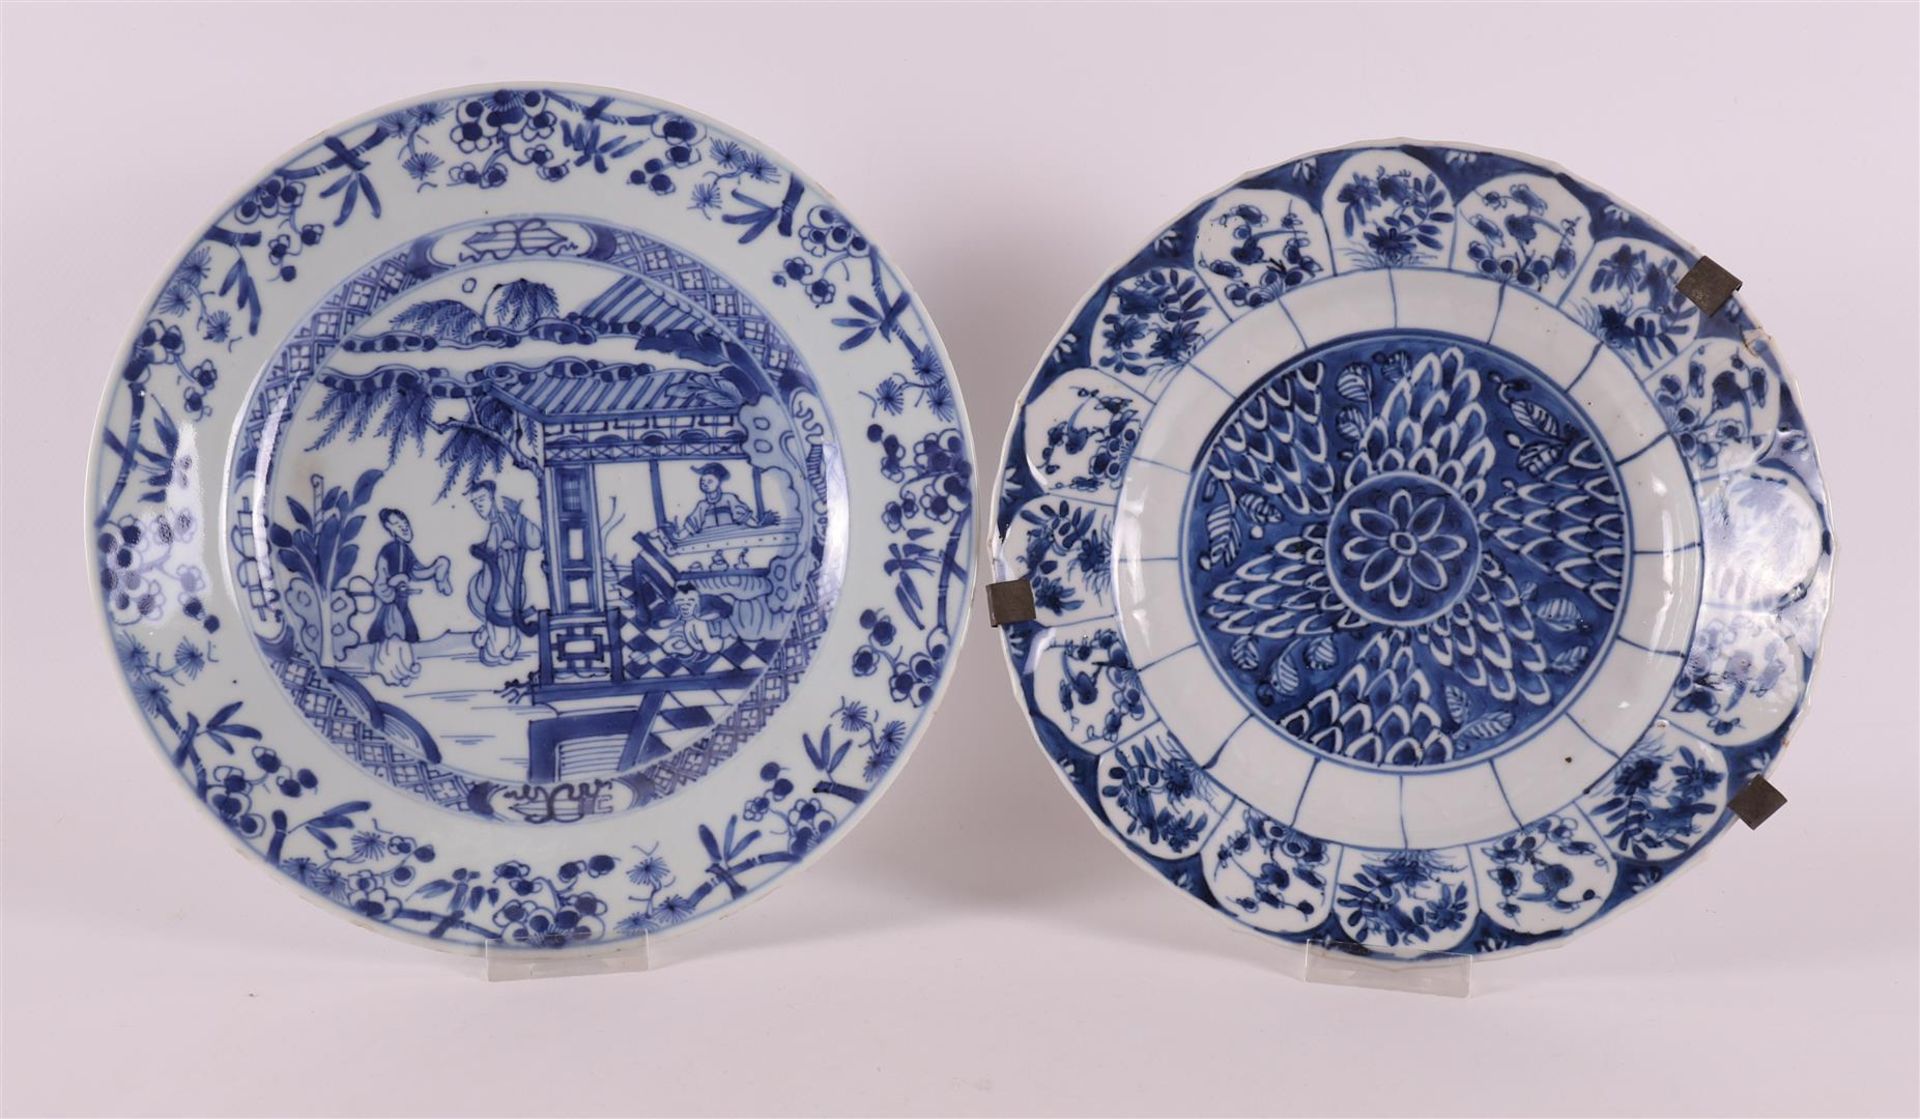 A blue and white contoured porcelain plate, China, Kangxi, around 1700. Blue underglaze lotus